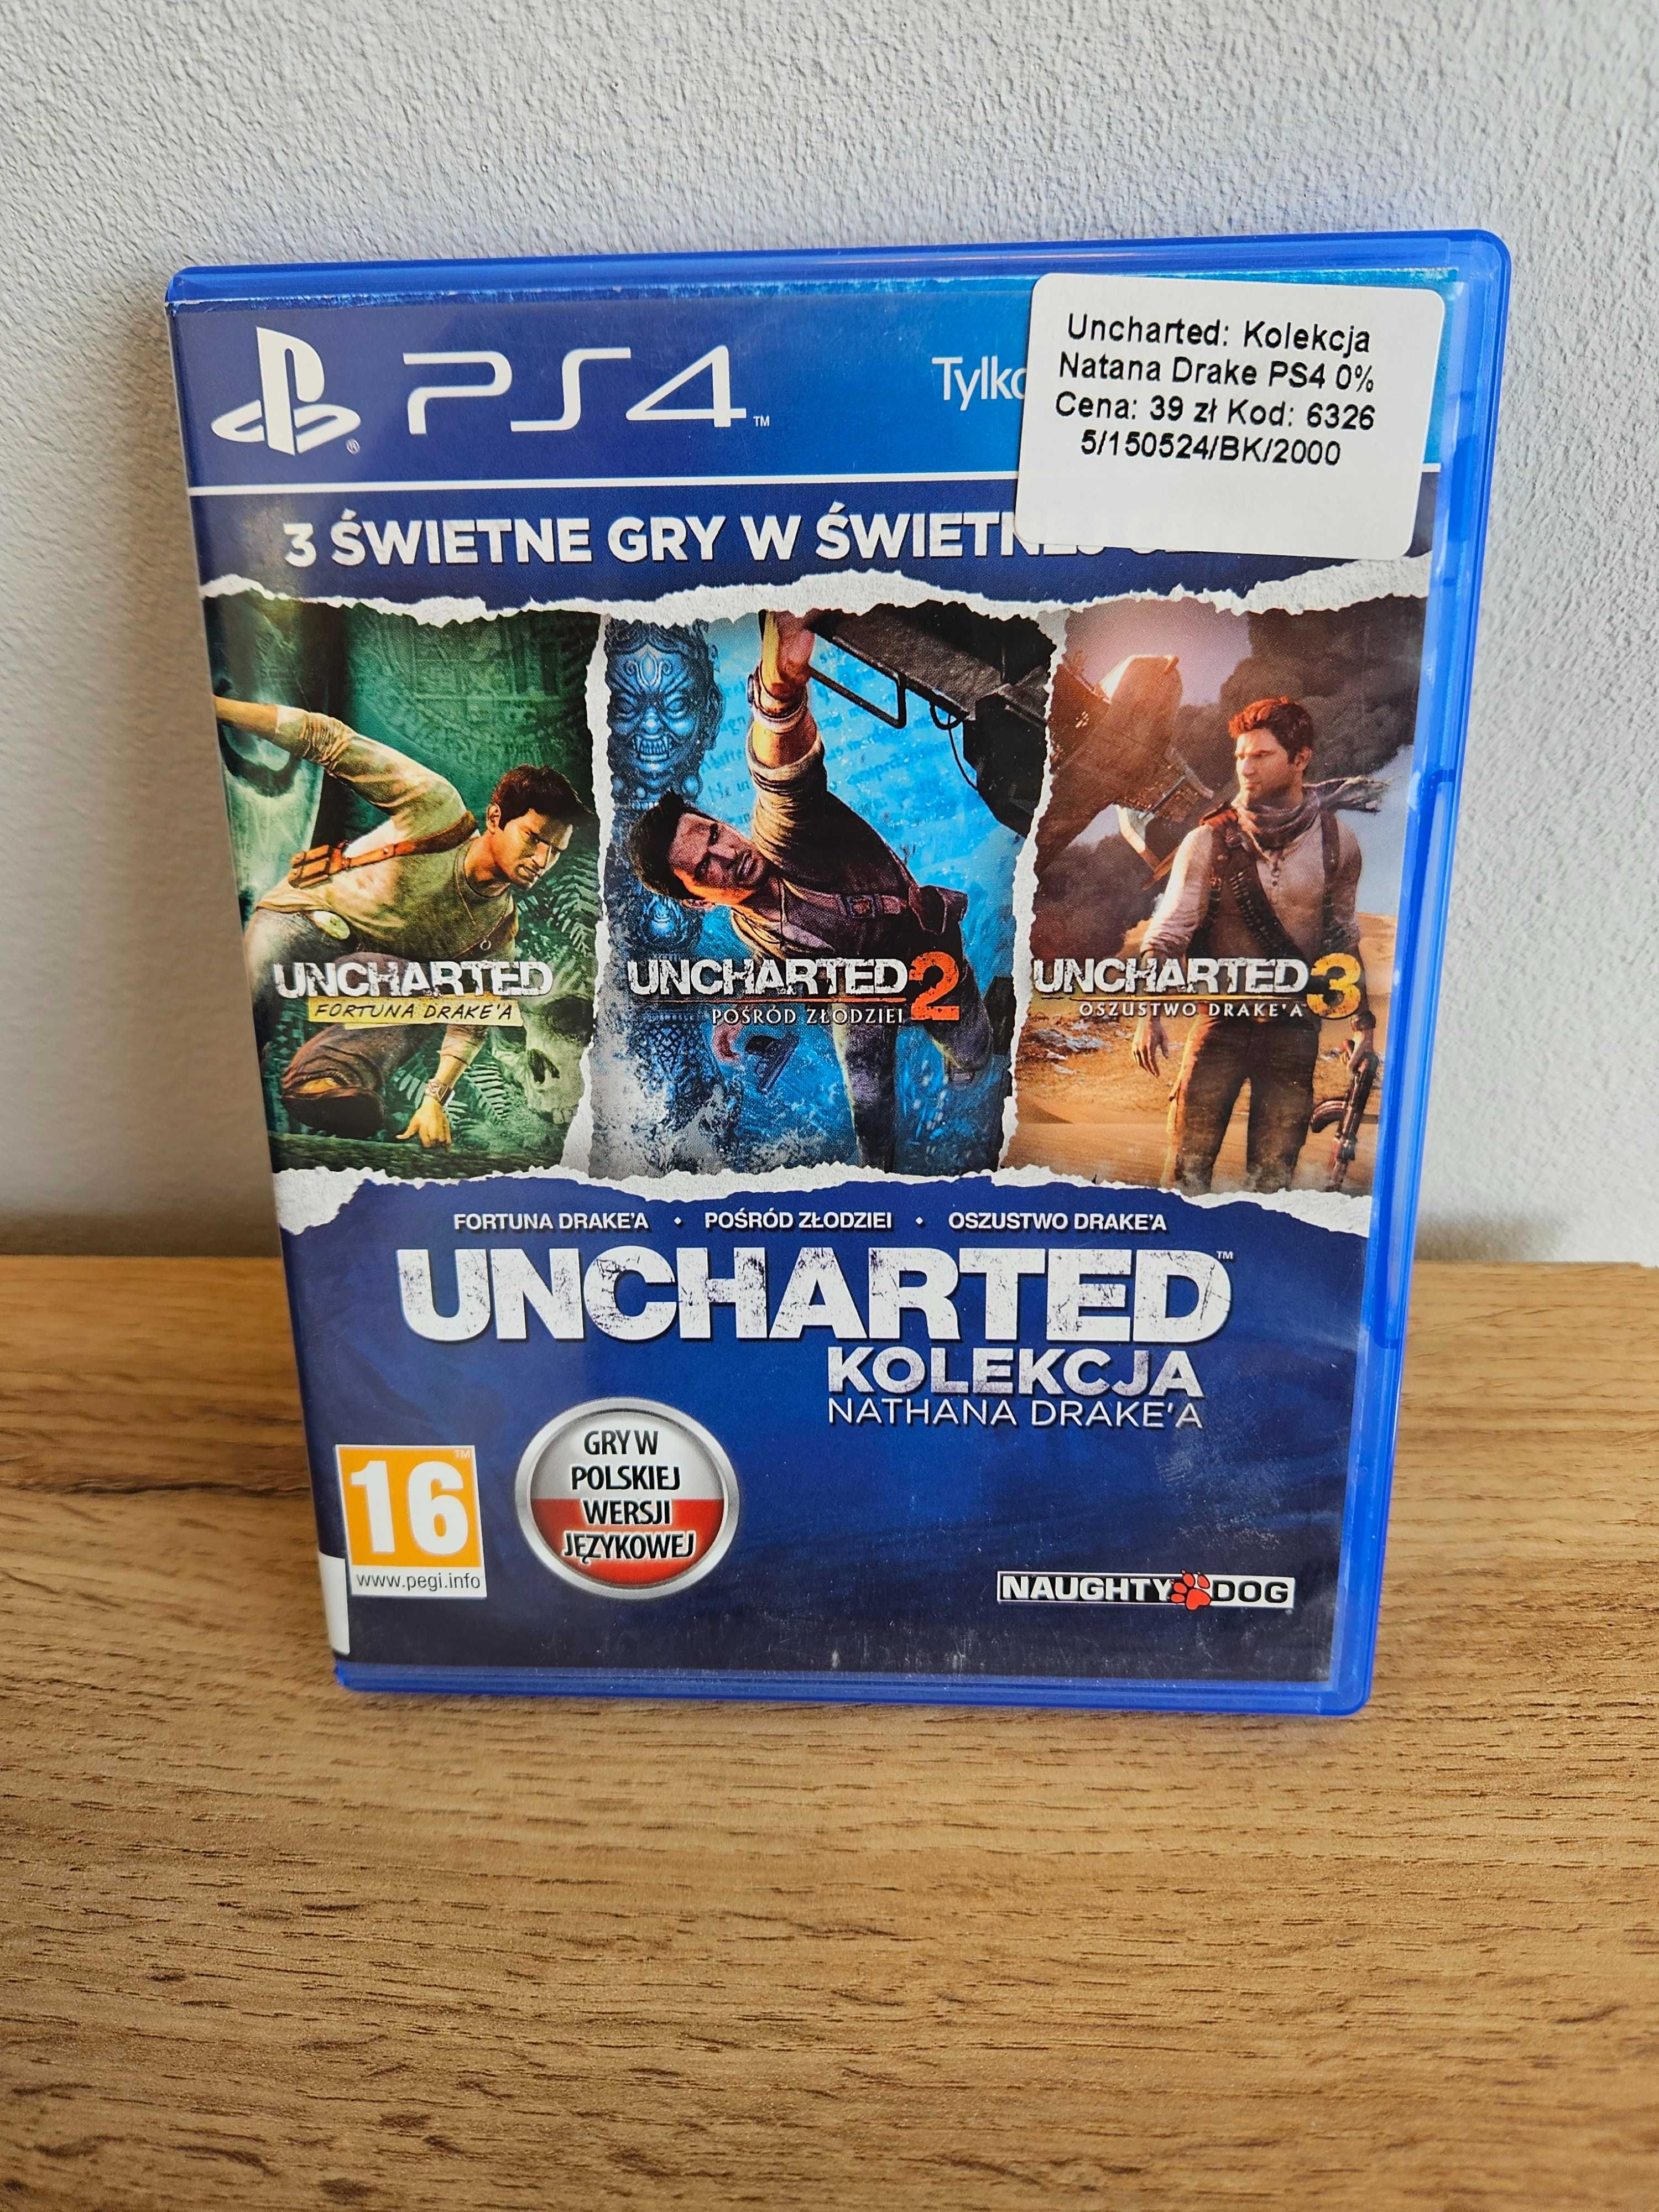 Uncharted: Kolekcja Nathana Drake PlayStation 4 As Game & GSM 6326